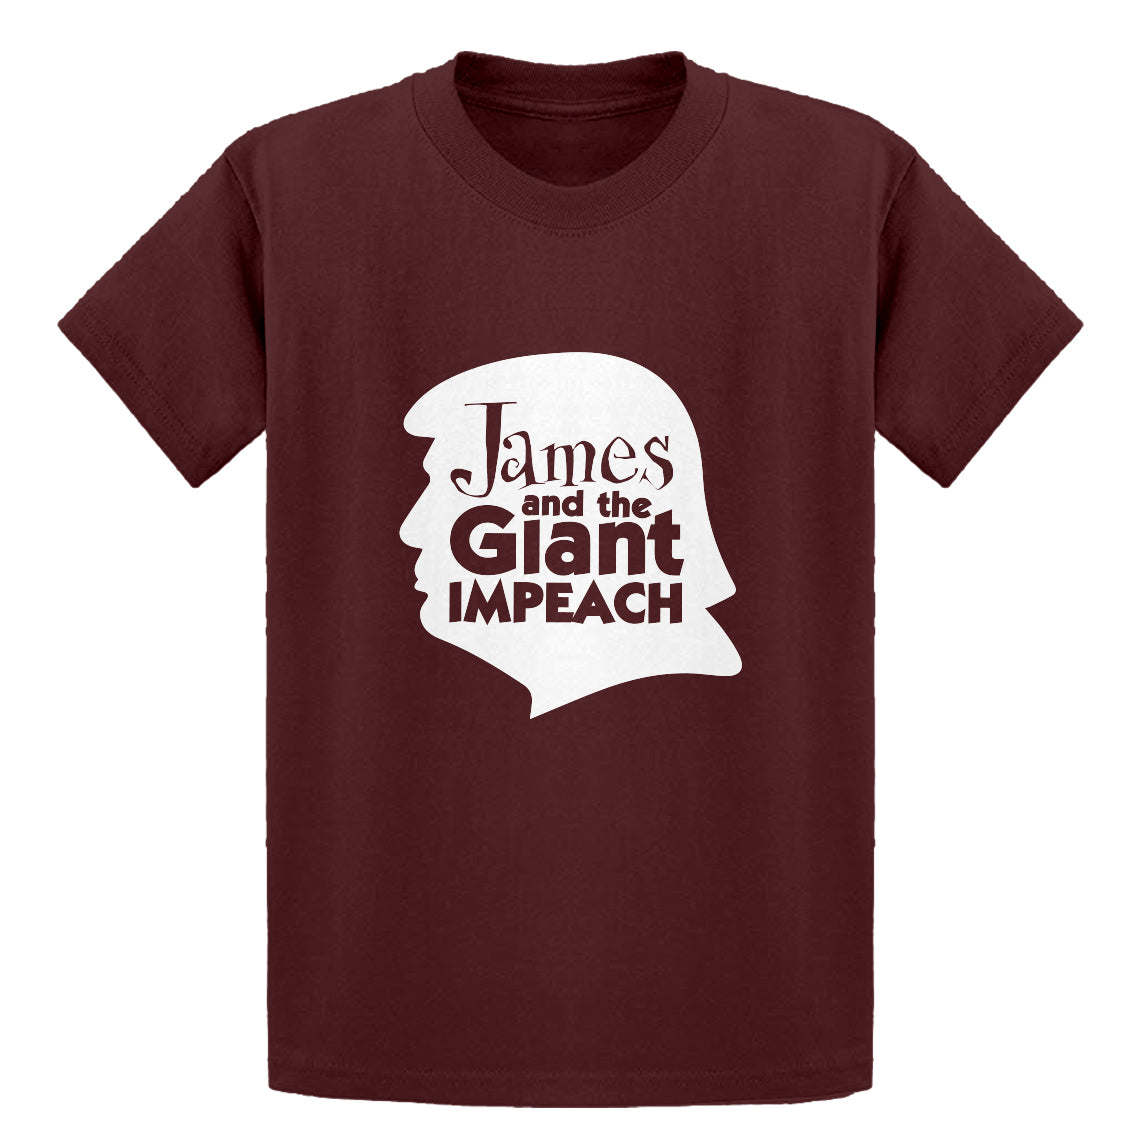 kids giants t shirt